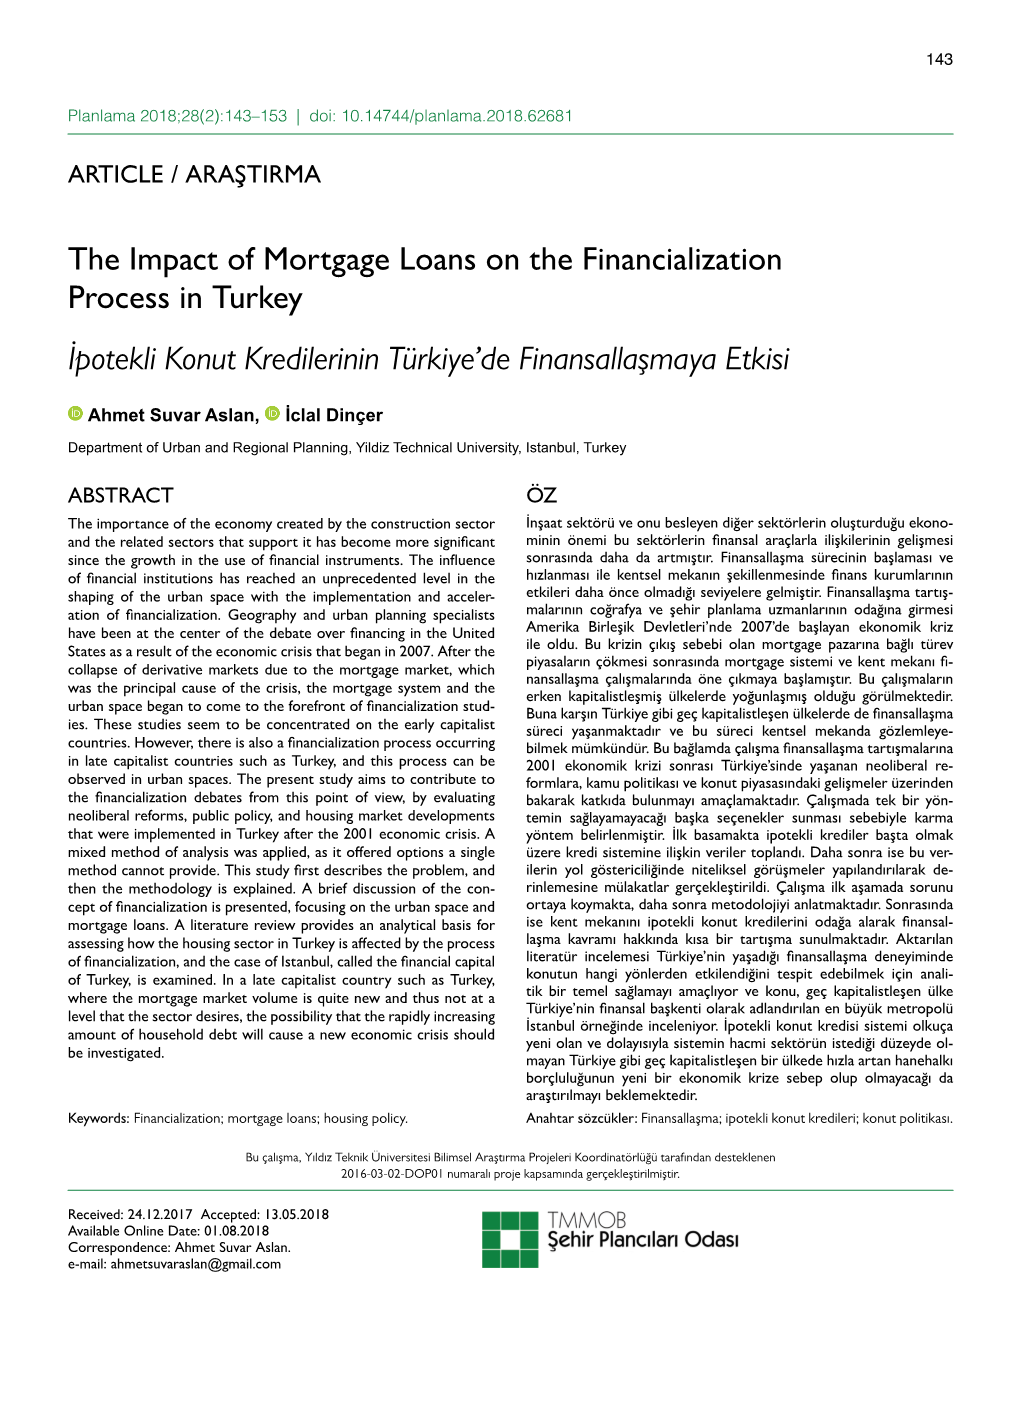 The Impact of Mortgage Loans on the Financialization Process in Turkey İpotekli Konut Kredilerinin Türkiye’De Finansallaşmaya Etkisi